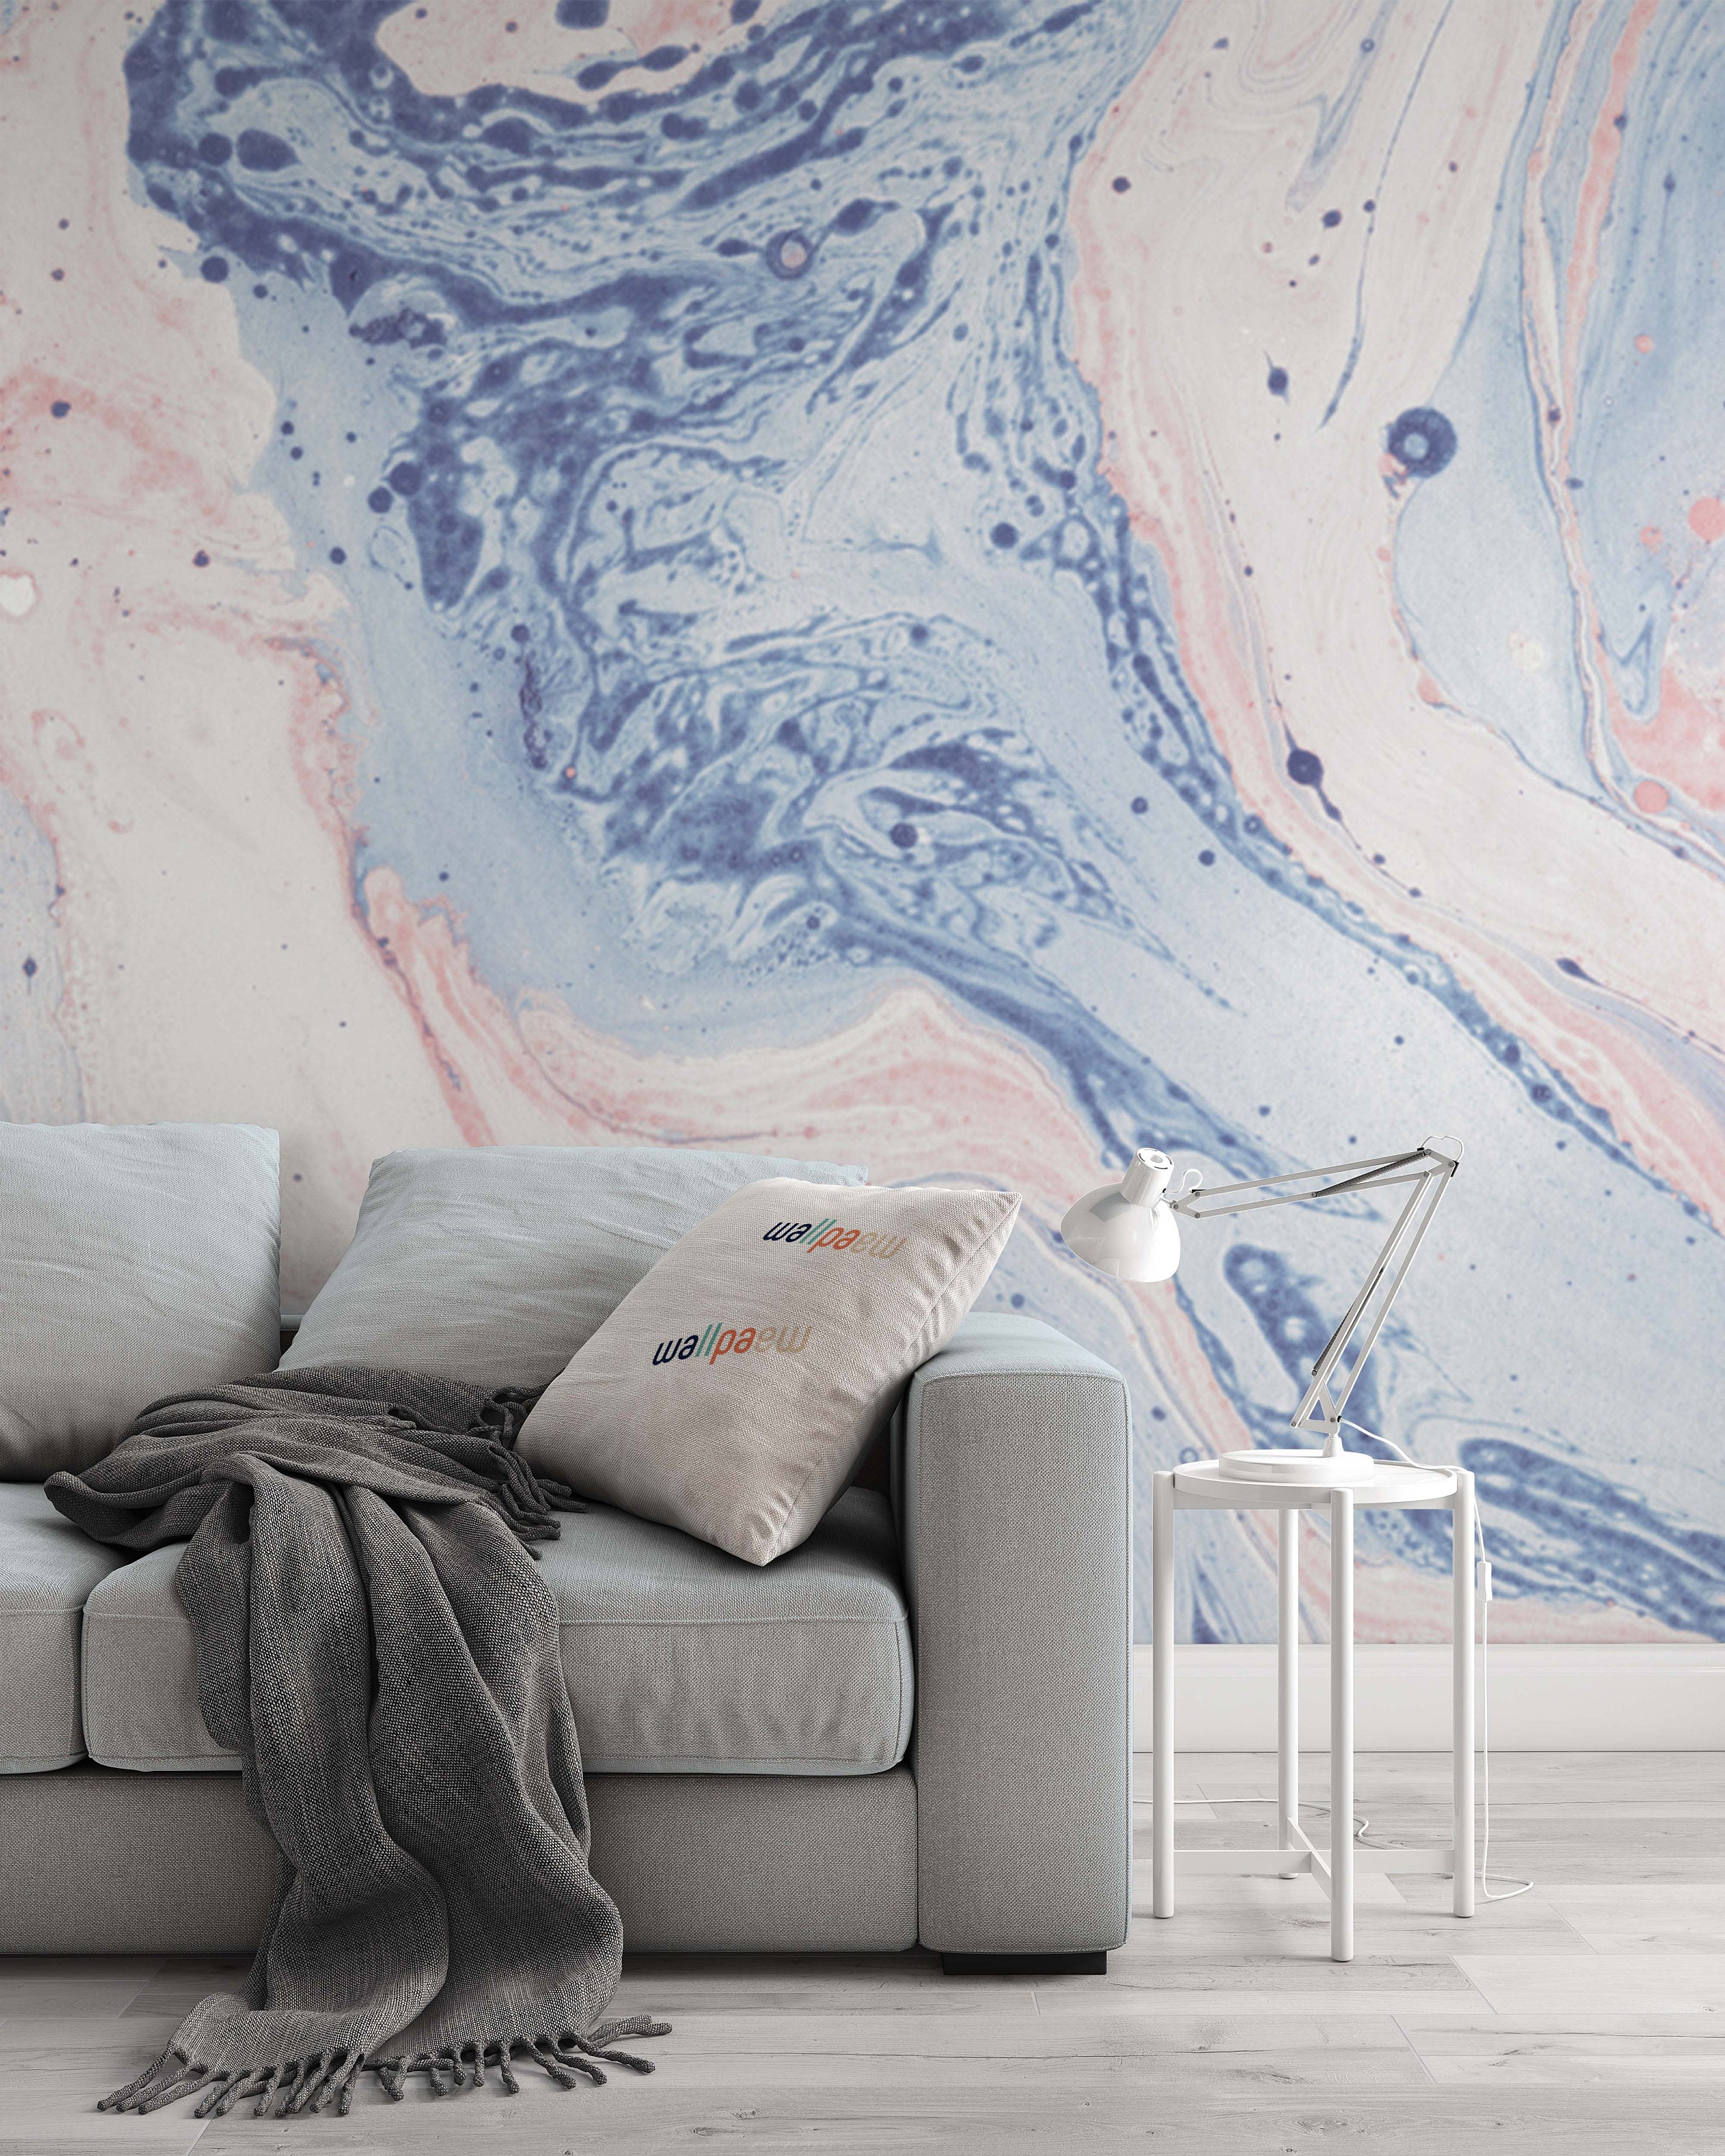 Modern Creative Design Abstract Marble Texture Wallpaper Bathroom Restaurant Bedroom Living Room Cafe Office Mural Home Decor Wall Art